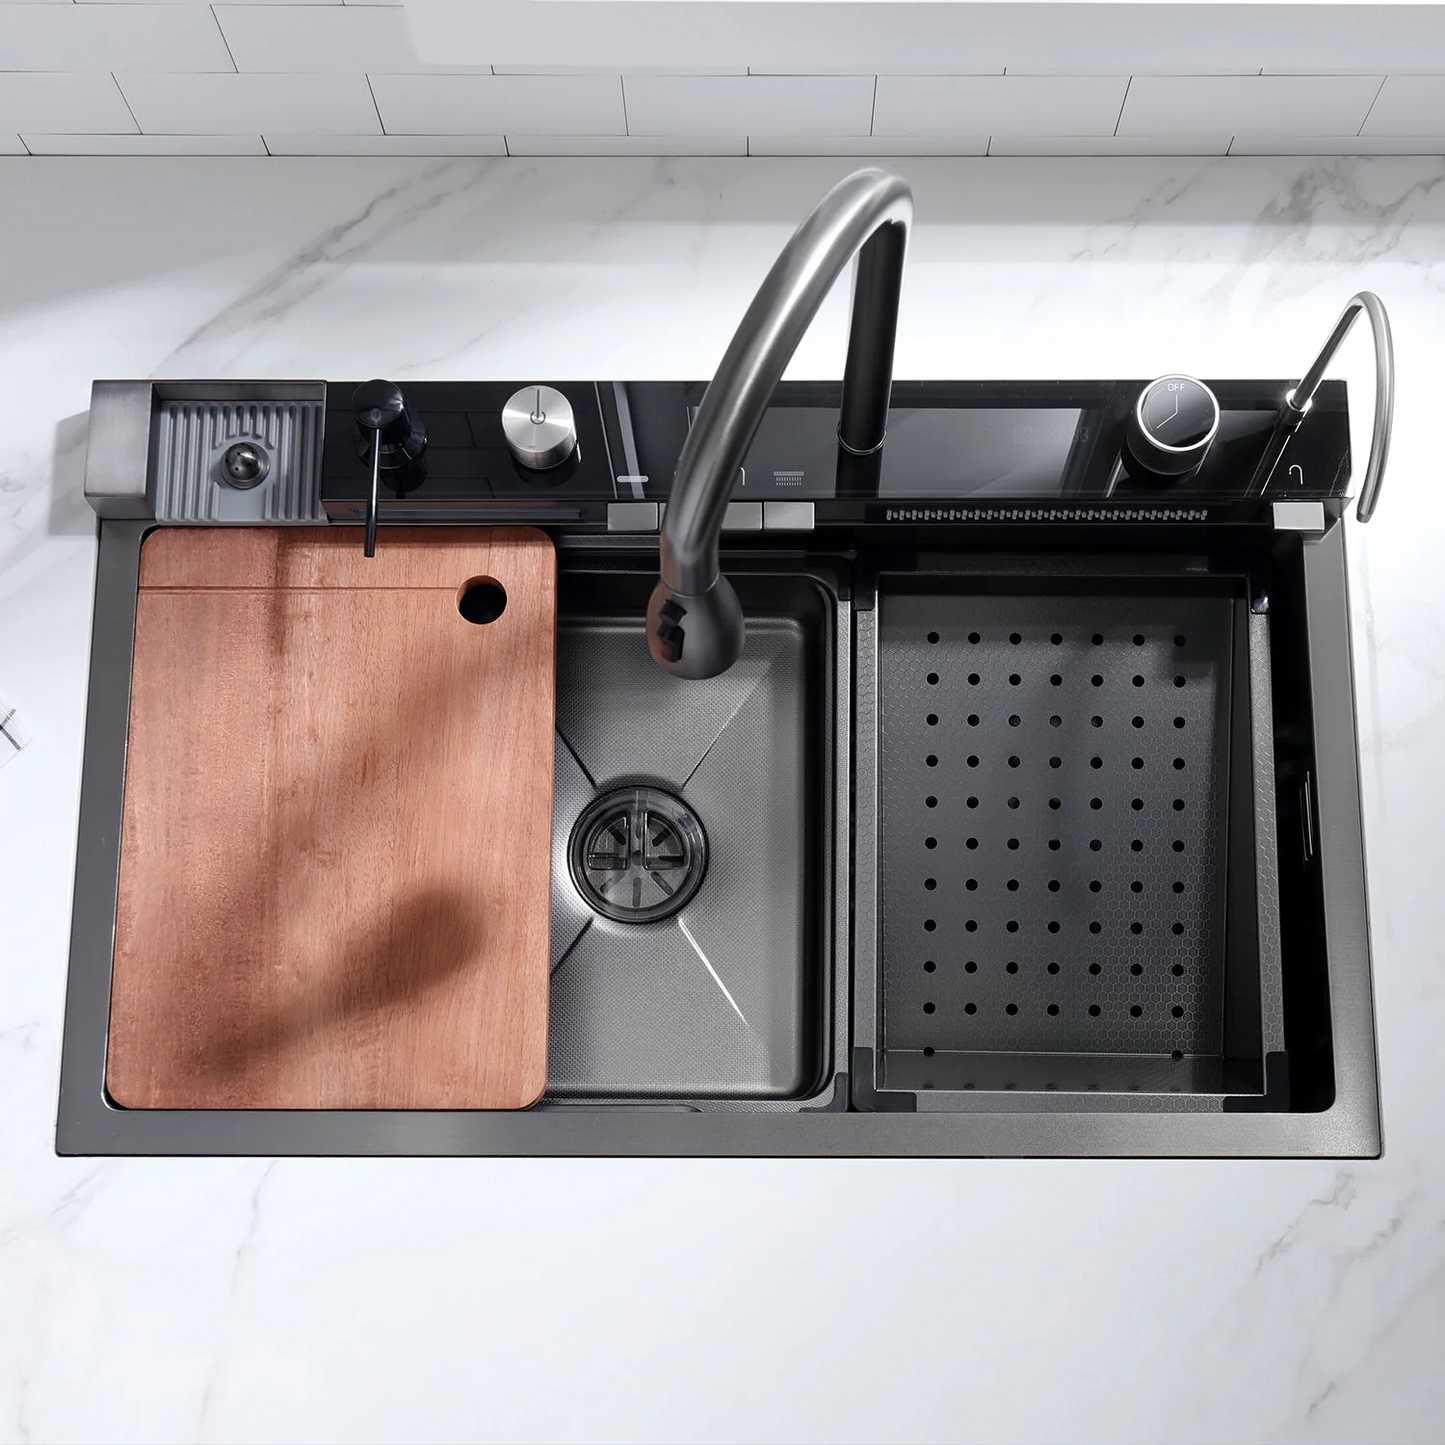 Bliote™ Waterfall Workstation Kitchen Sink Set With Digital Temperature Display